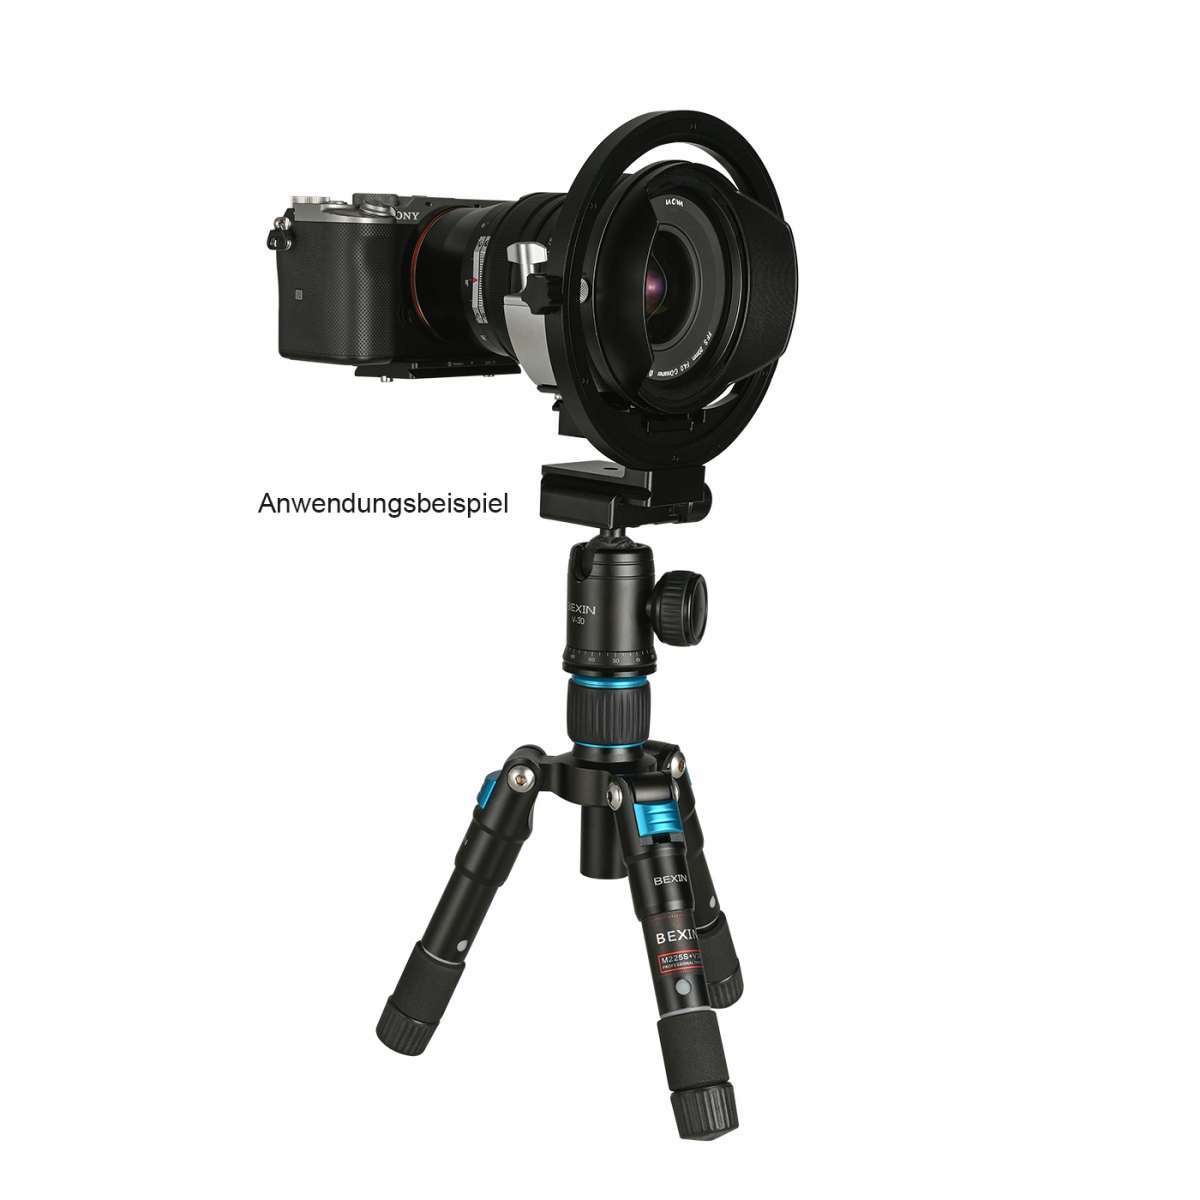 Laowa Shift Lens Support V3 für 20mm / 15mm f/4,5